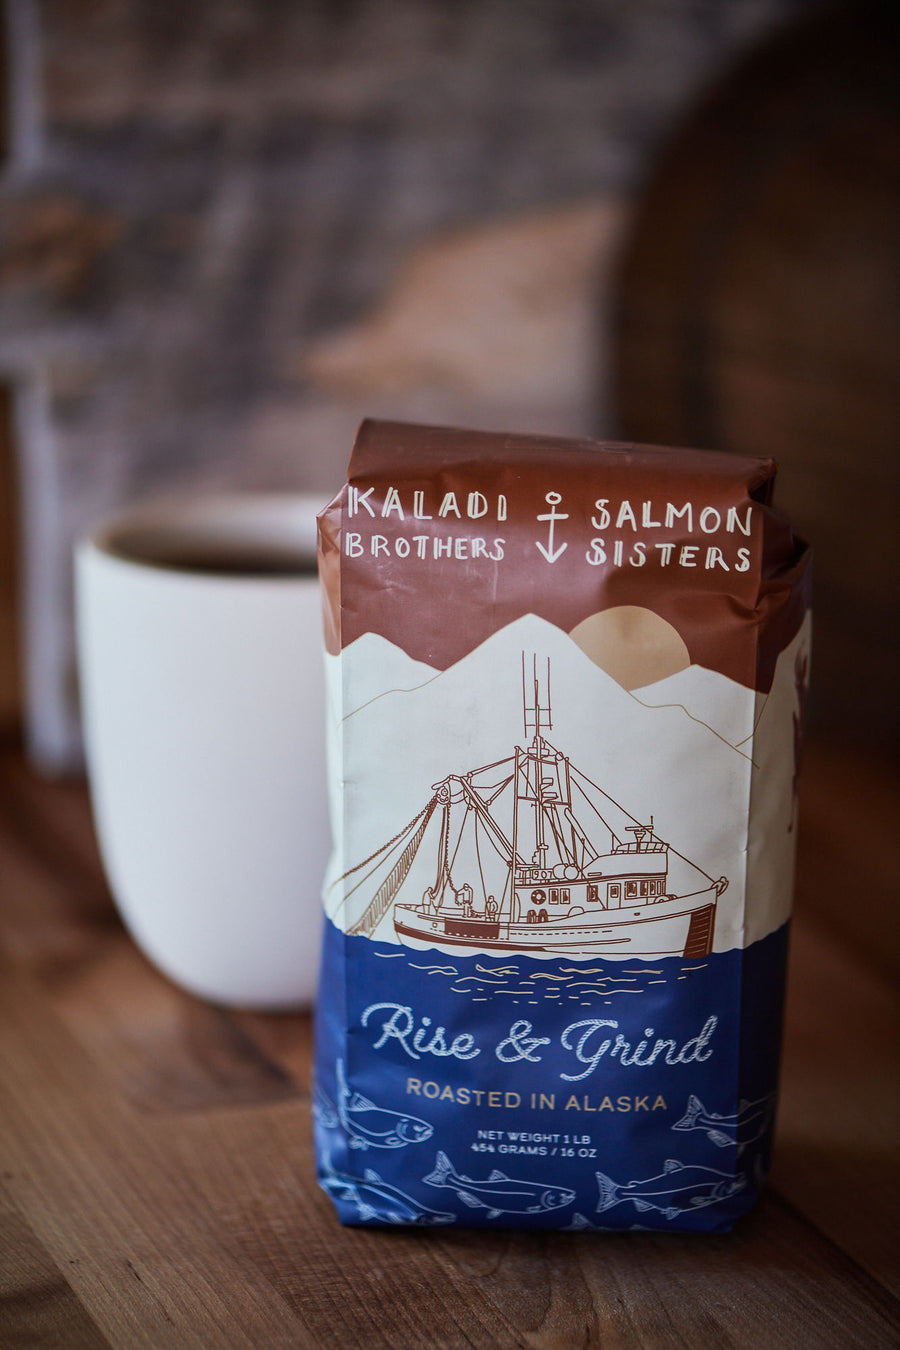 Rise & Grind Coffee